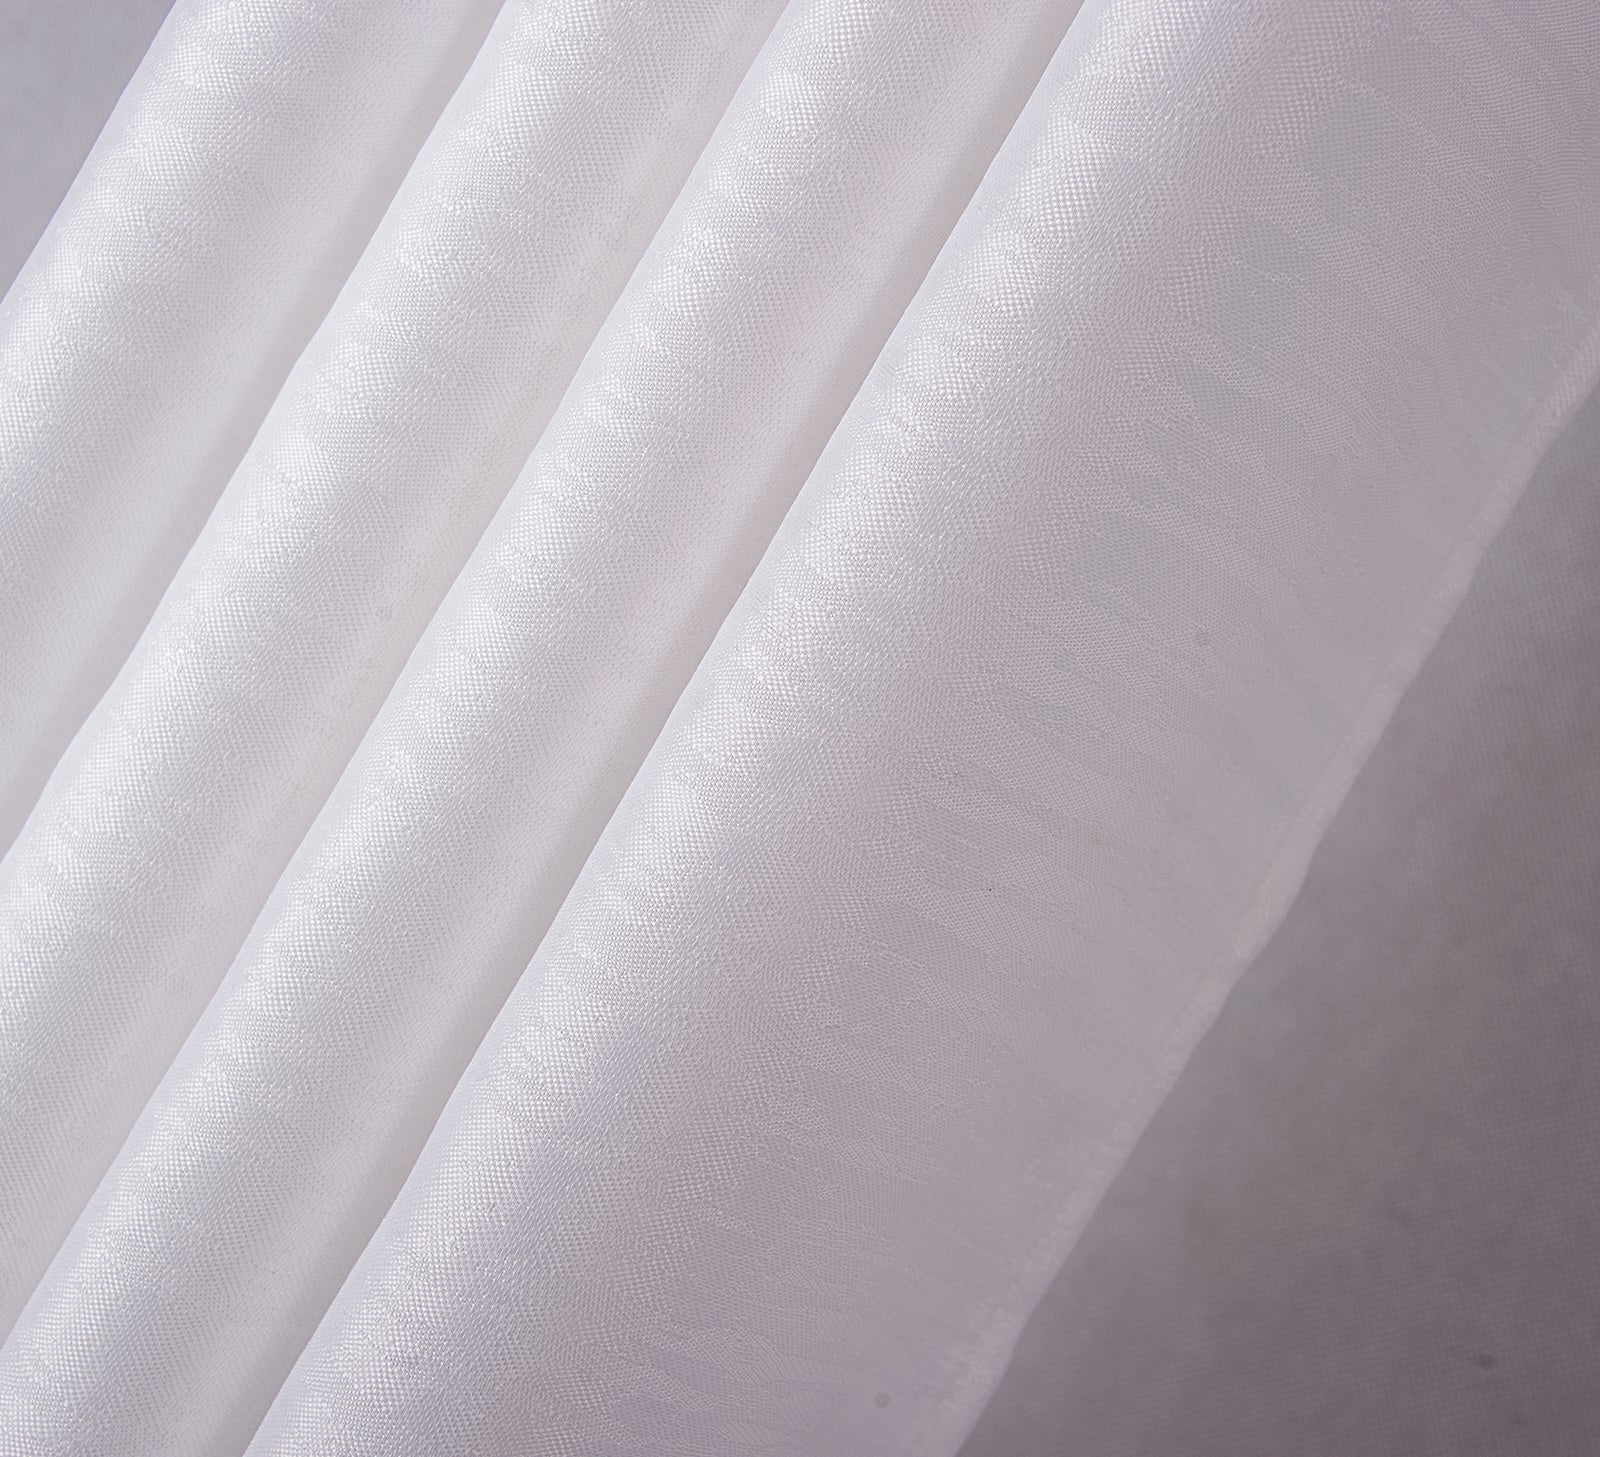 Tropez Two Tone Jacquard 54 x 84 in. Single Grommet Curtain Panel - Linen Universe Co.